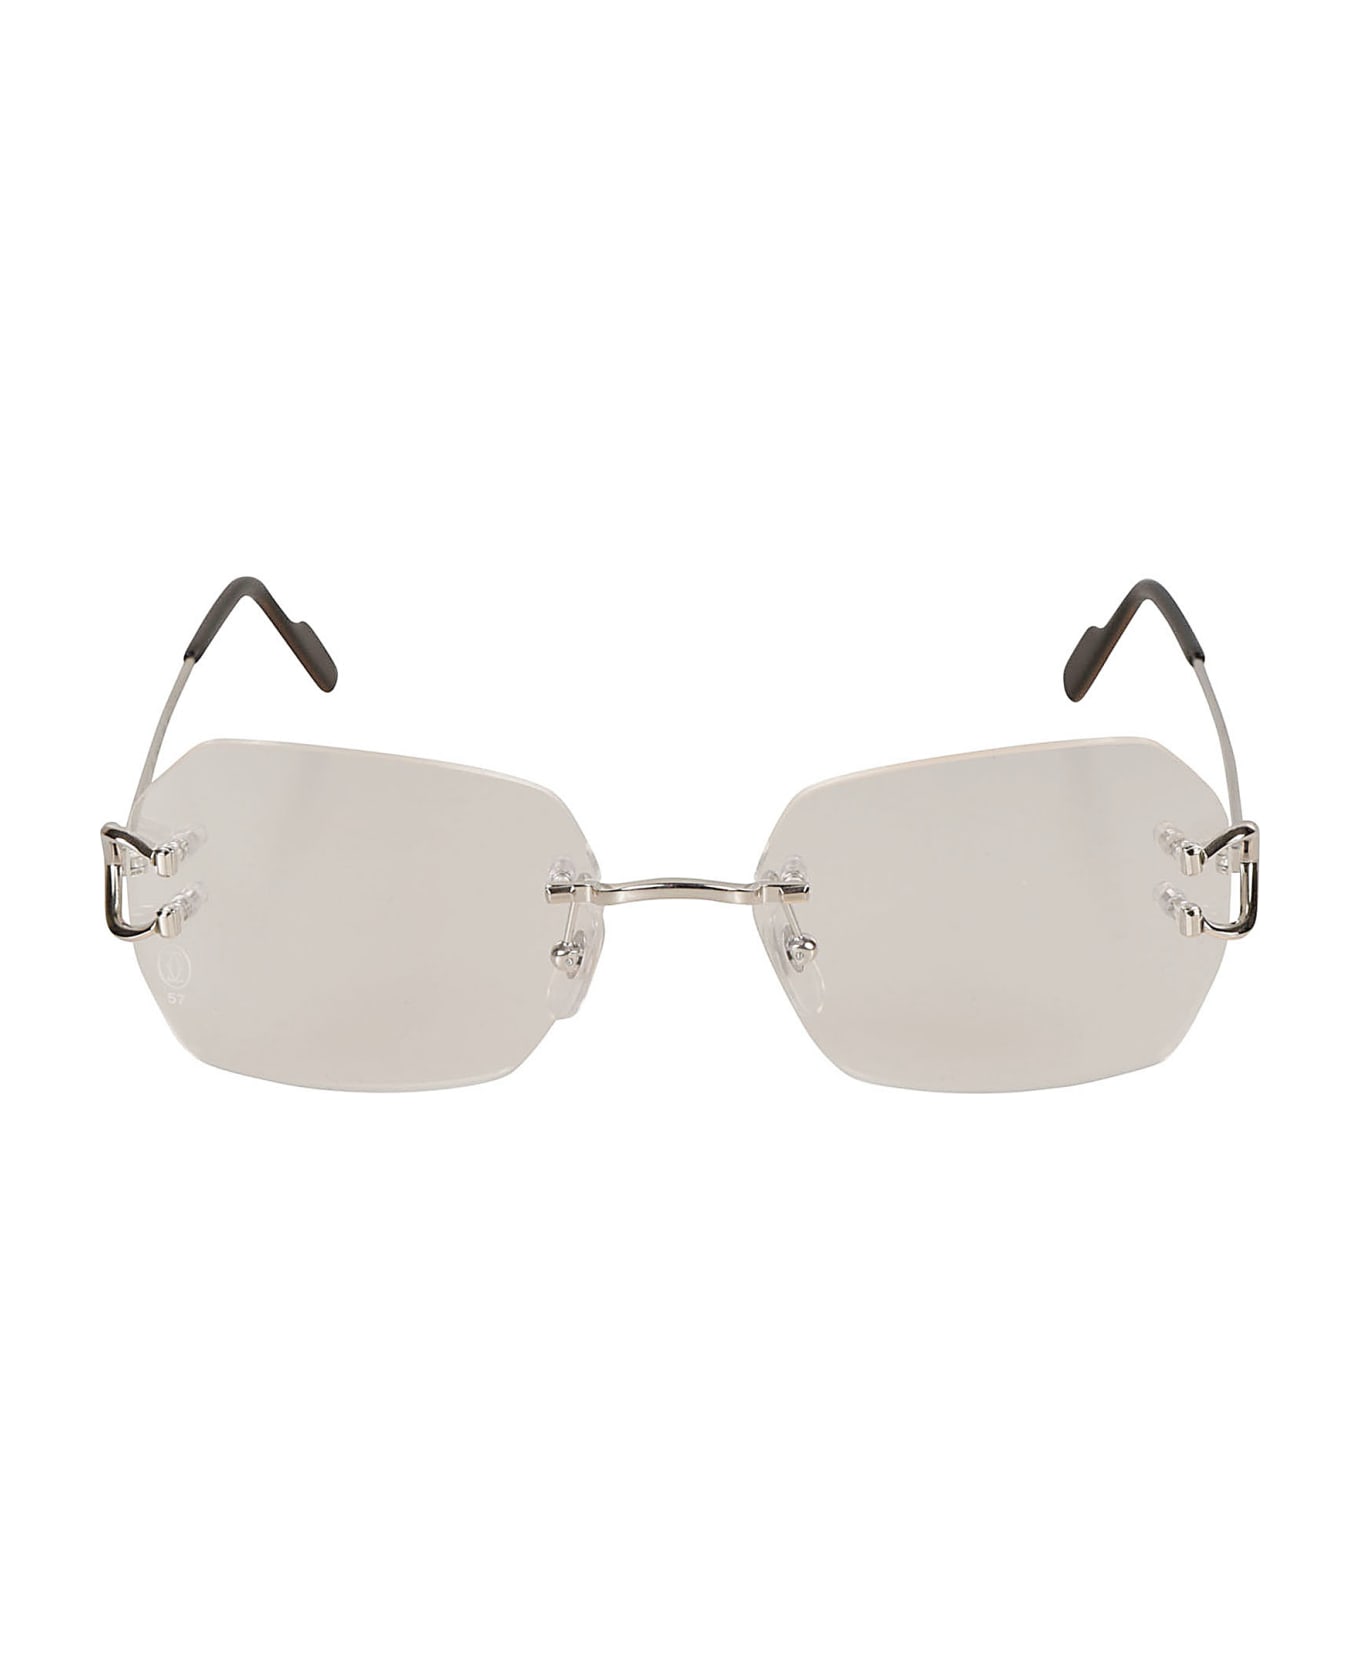 Cartier Eyewear Square Frame Glasses - Silver